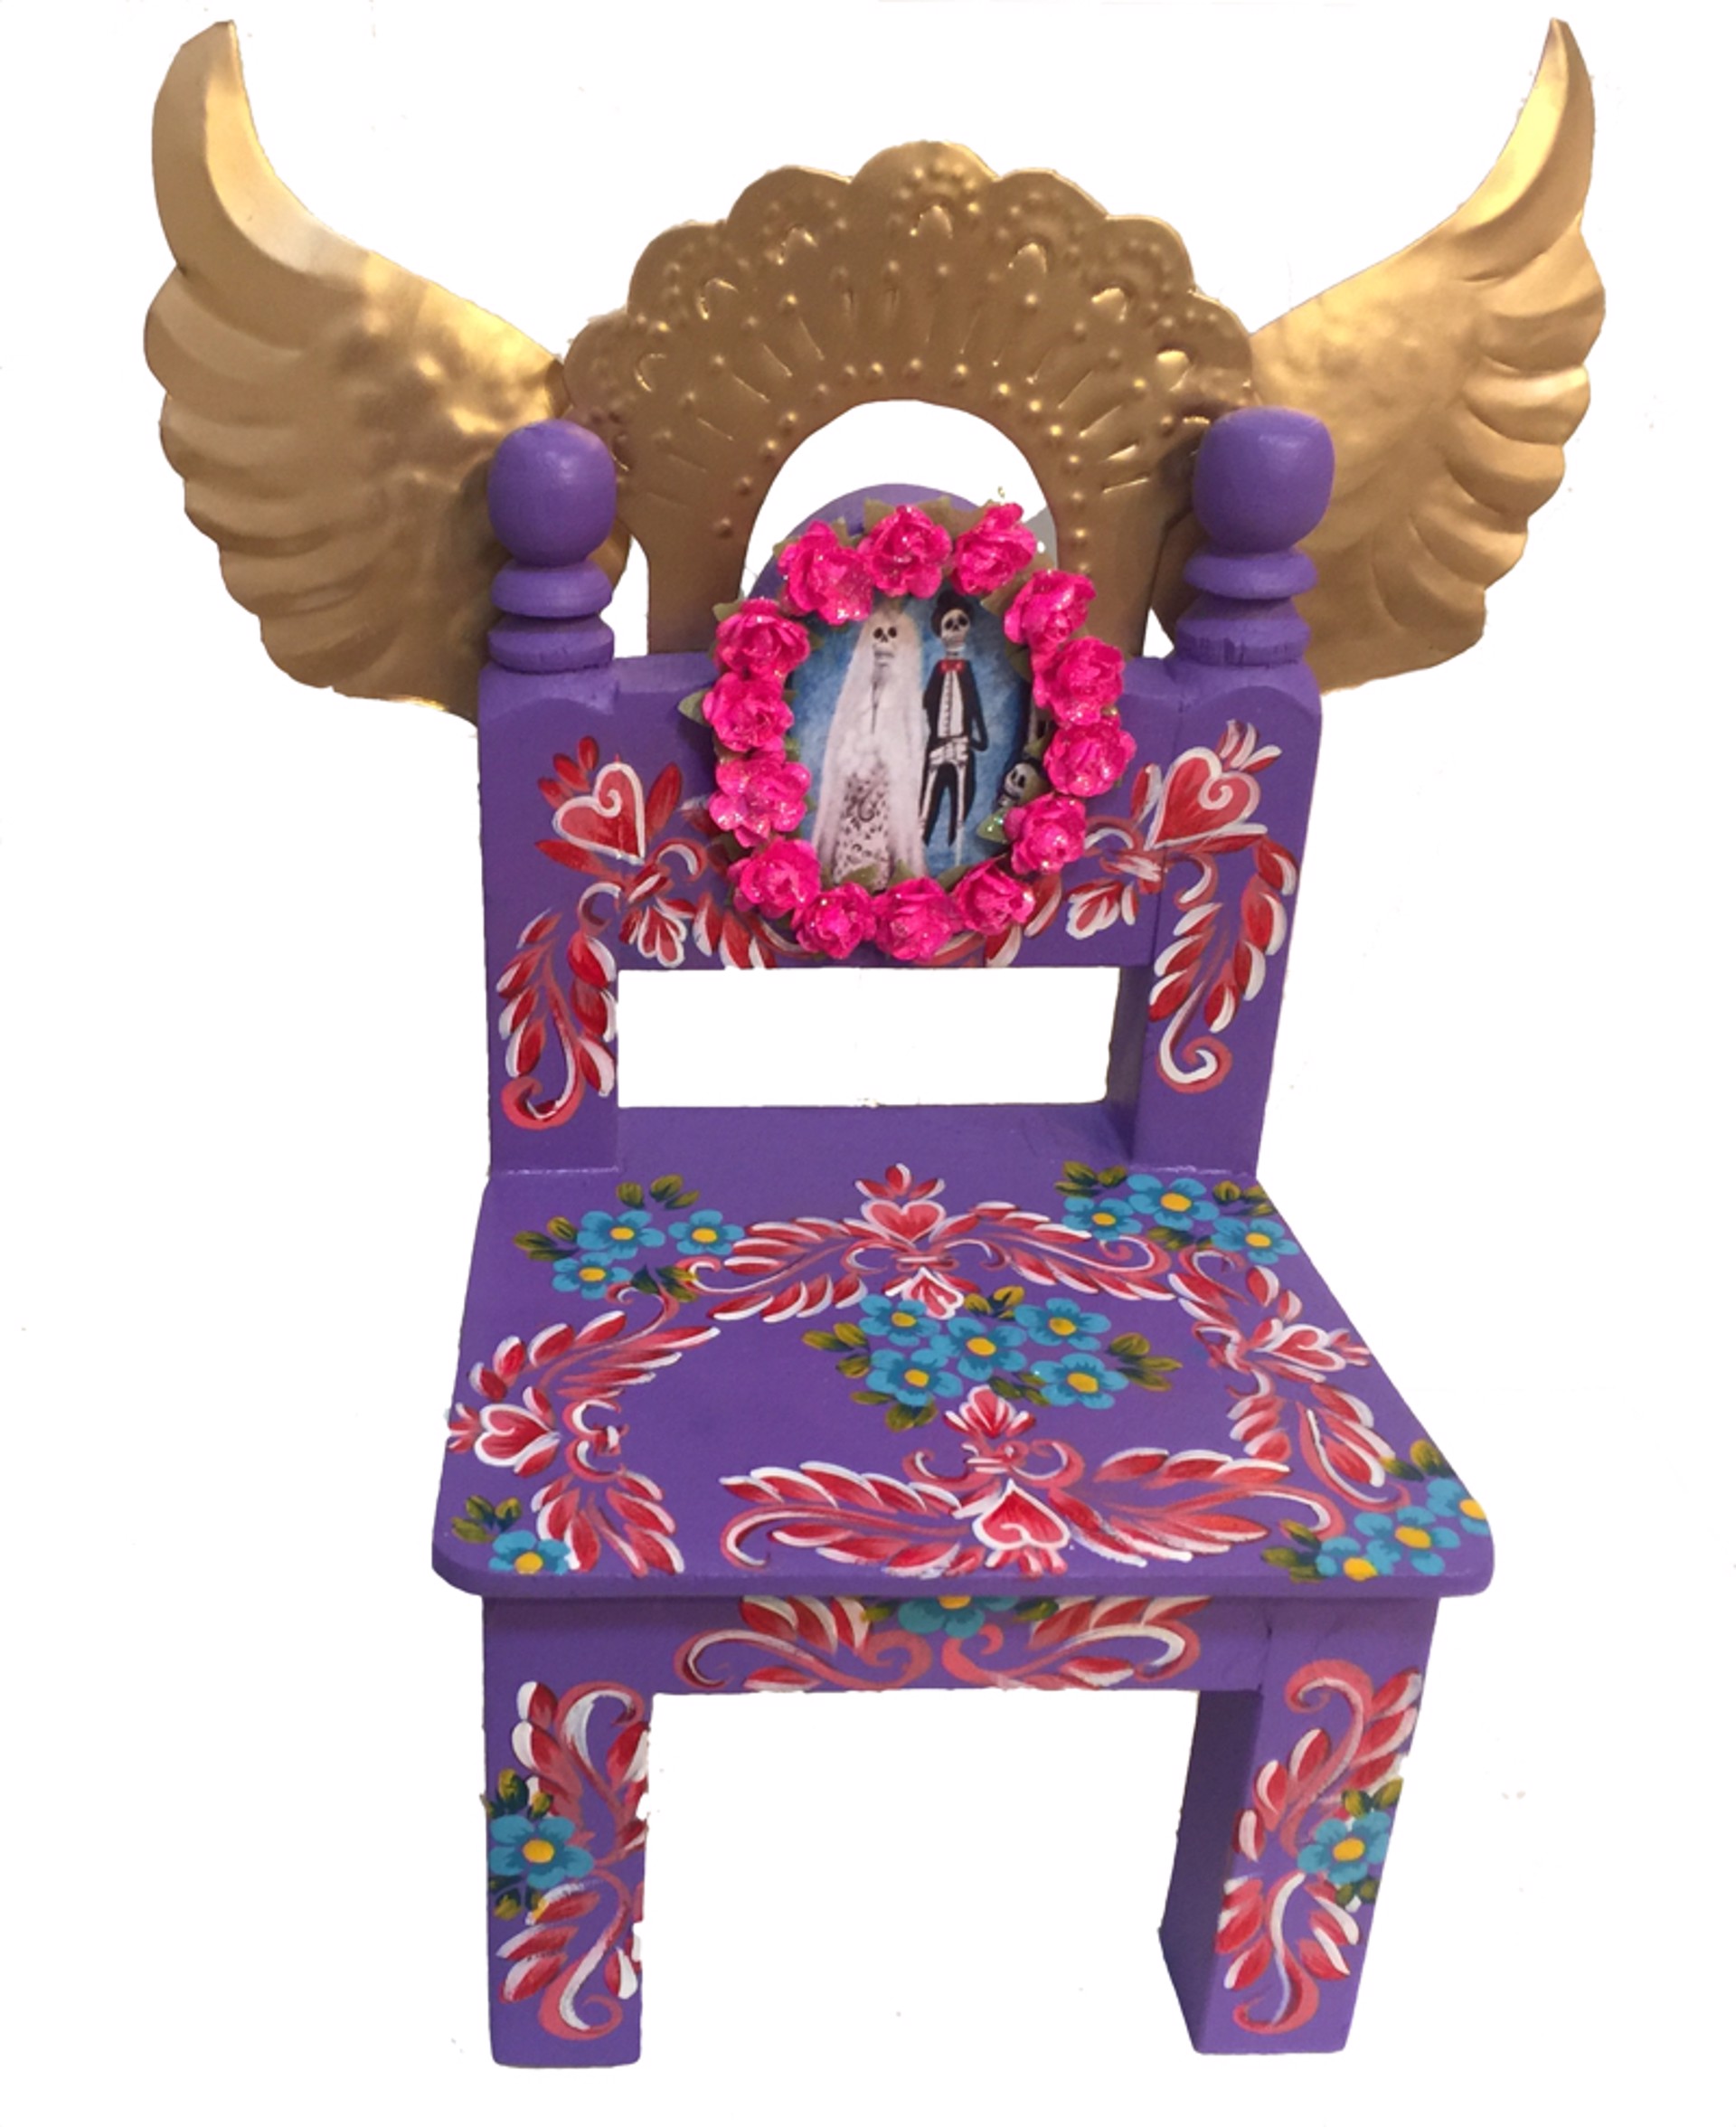 Muertos Chair by Indigo Desert Ranch - Day of the Dead